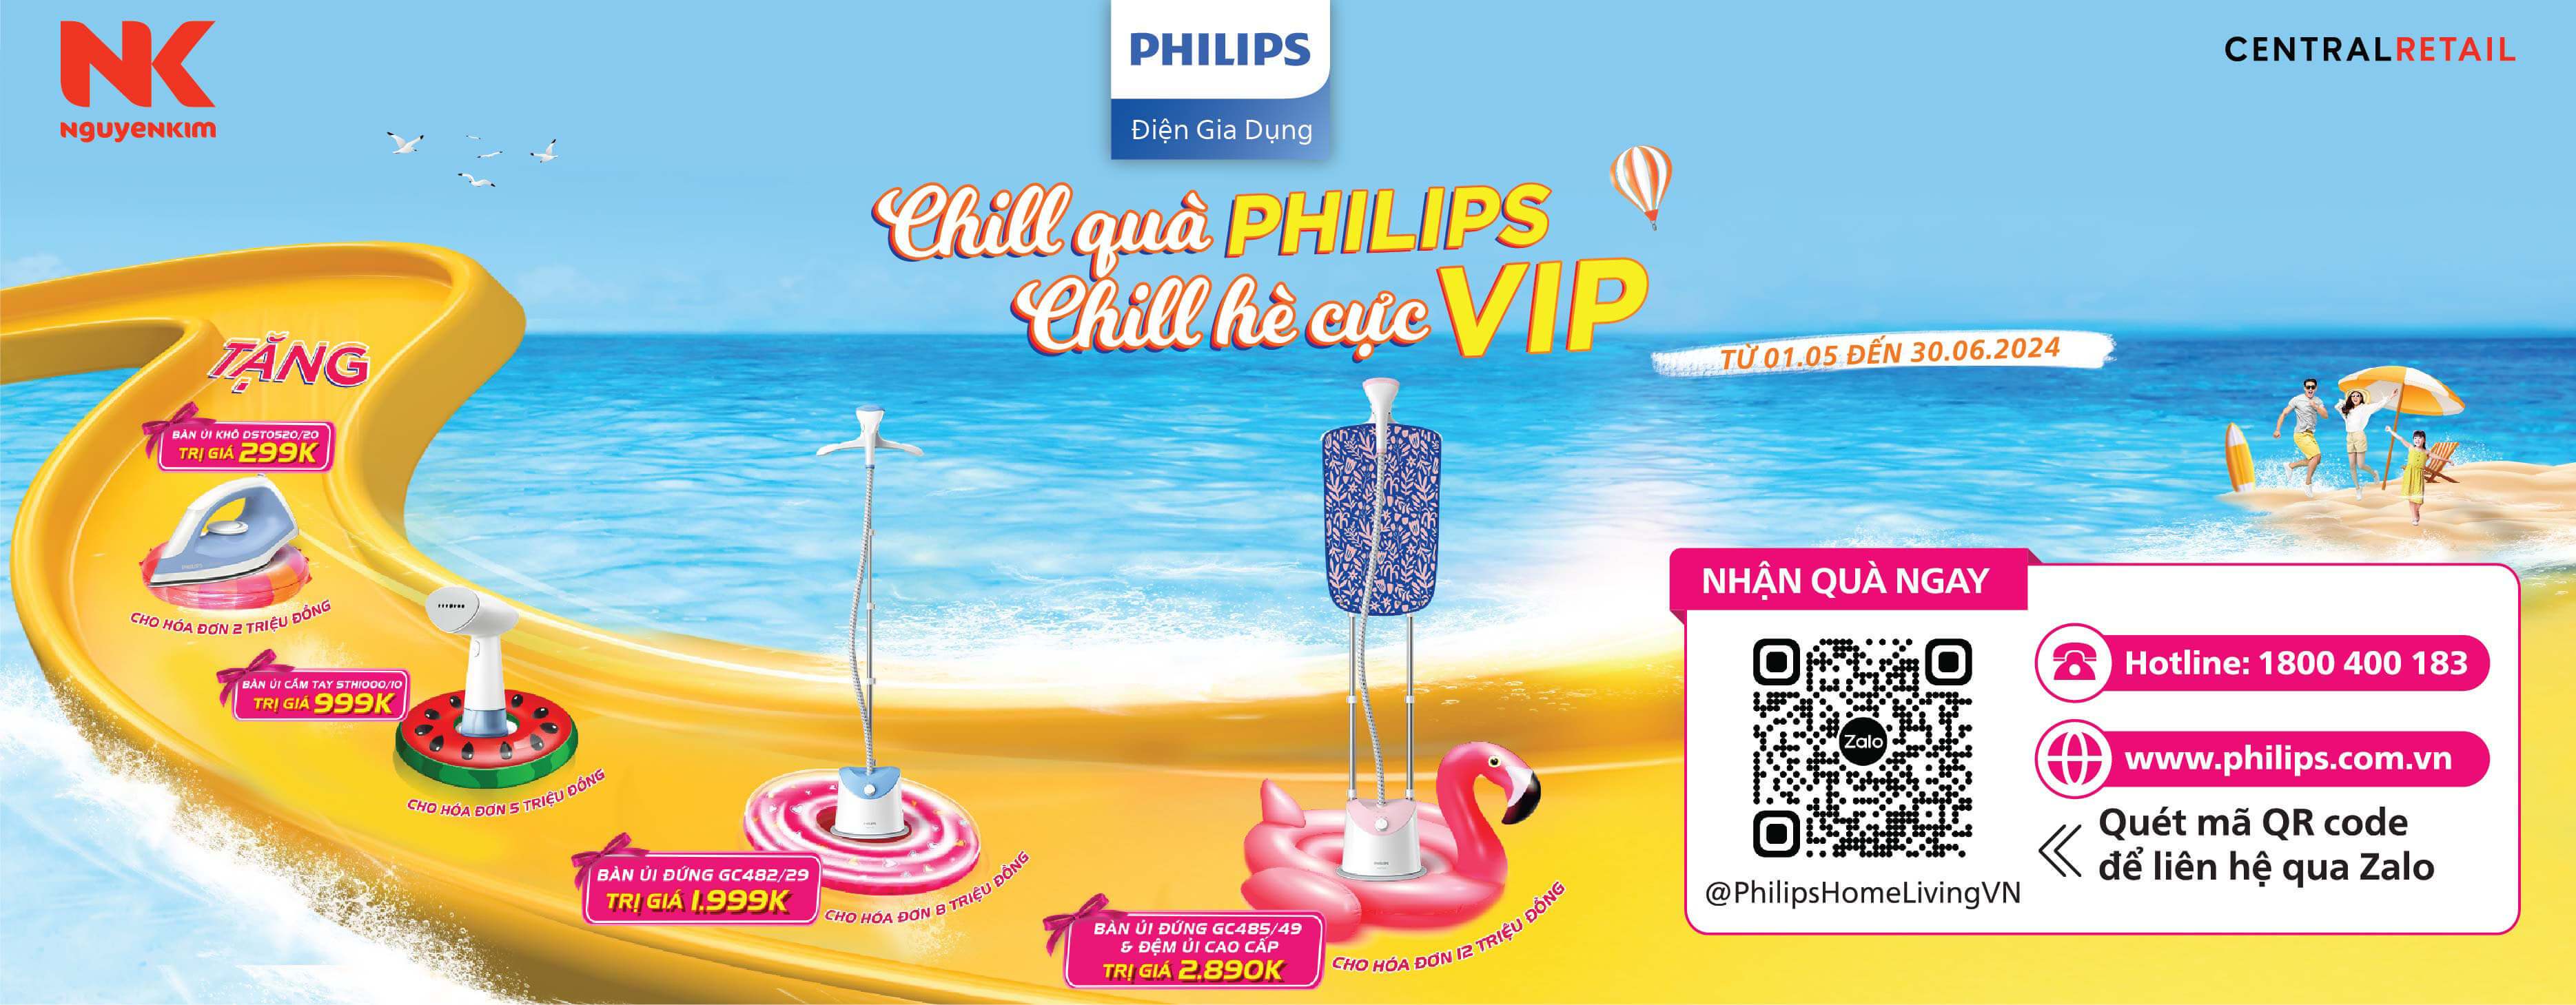 ECM_Chill quà Philips - Chill hè cực vip_cate banner